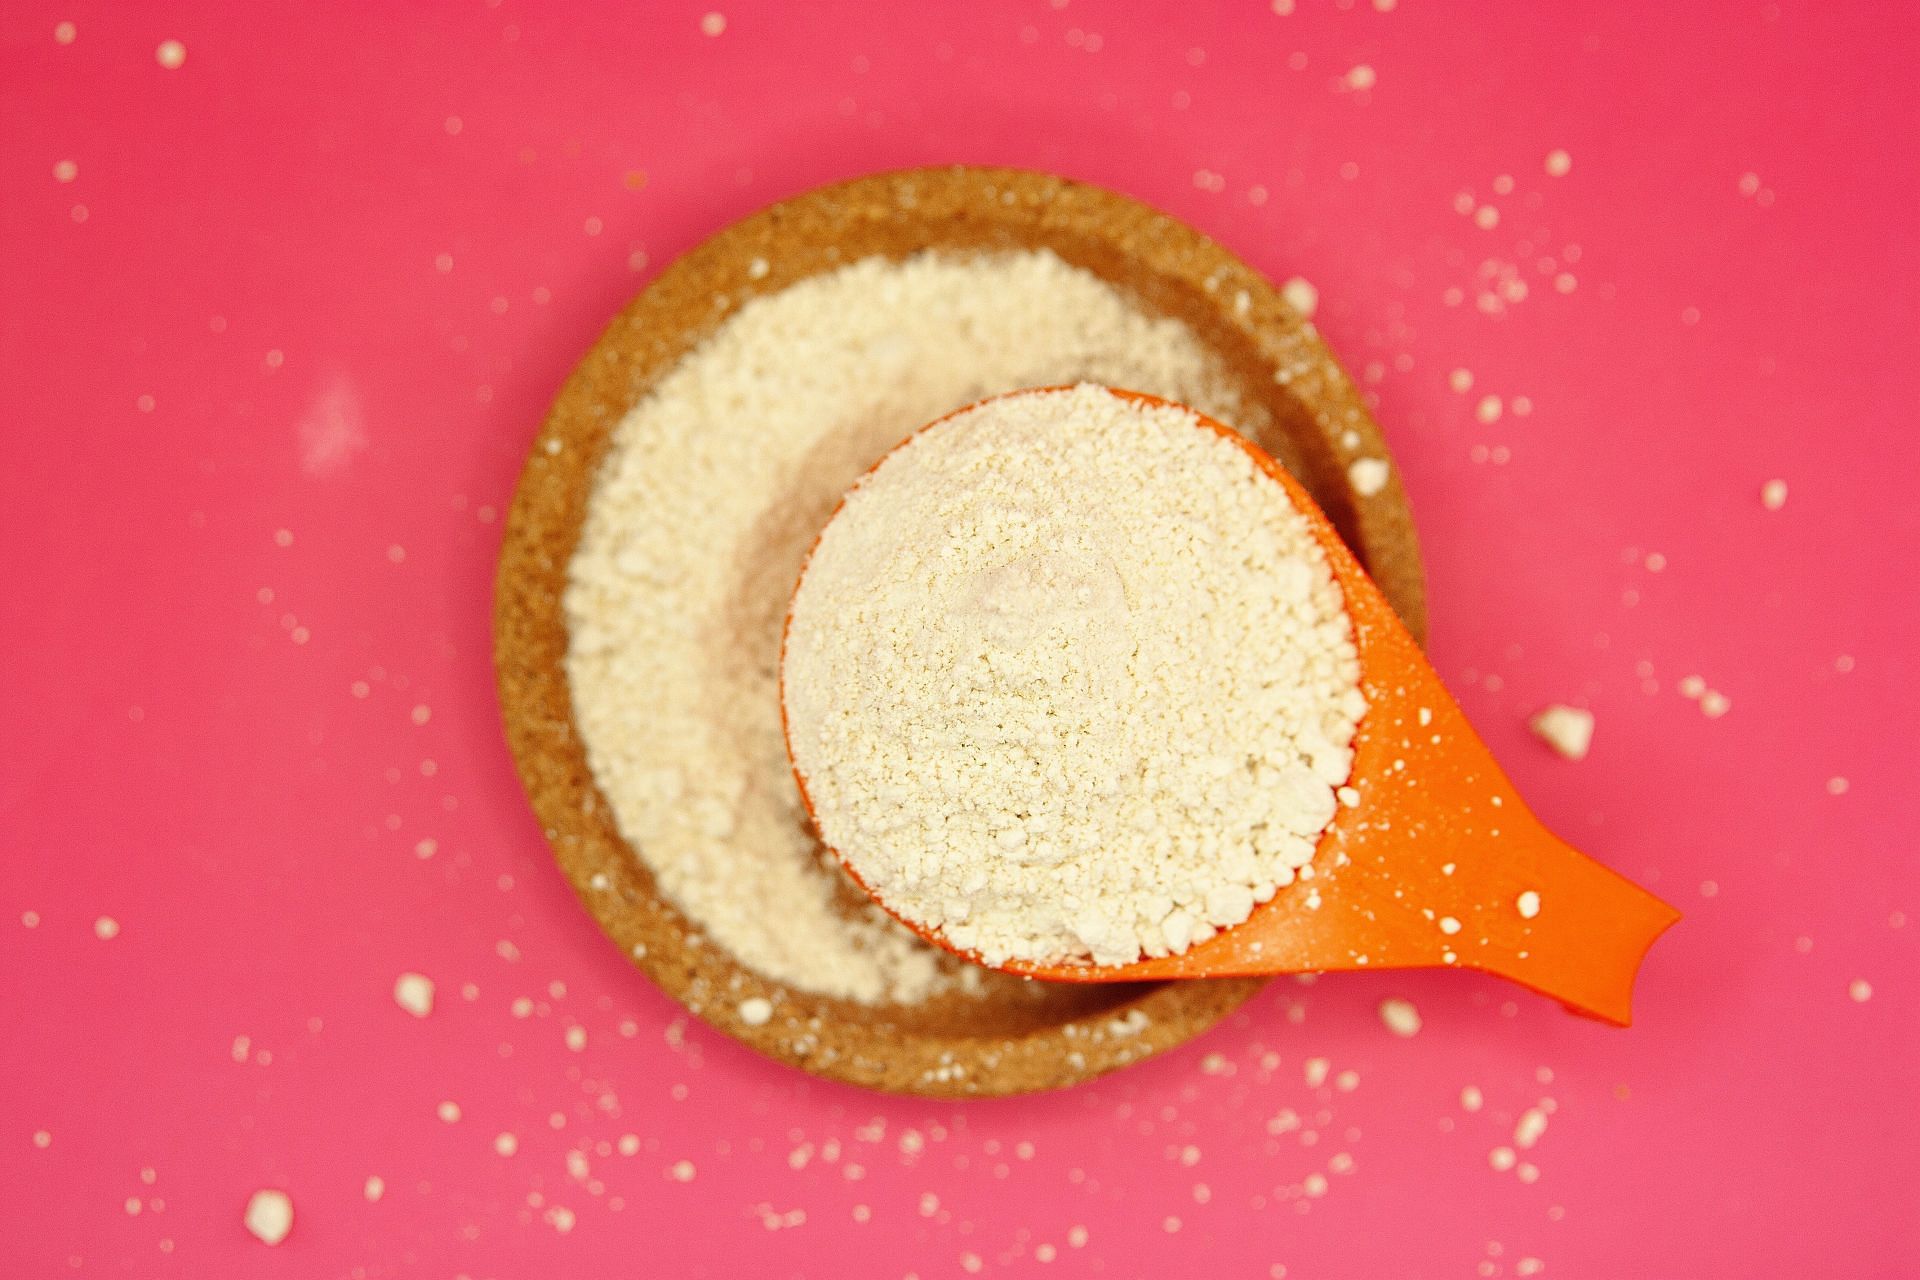 Guayusa extract in powder form. (Image via Pexels/  Karen La&aring;rk Boshoff)